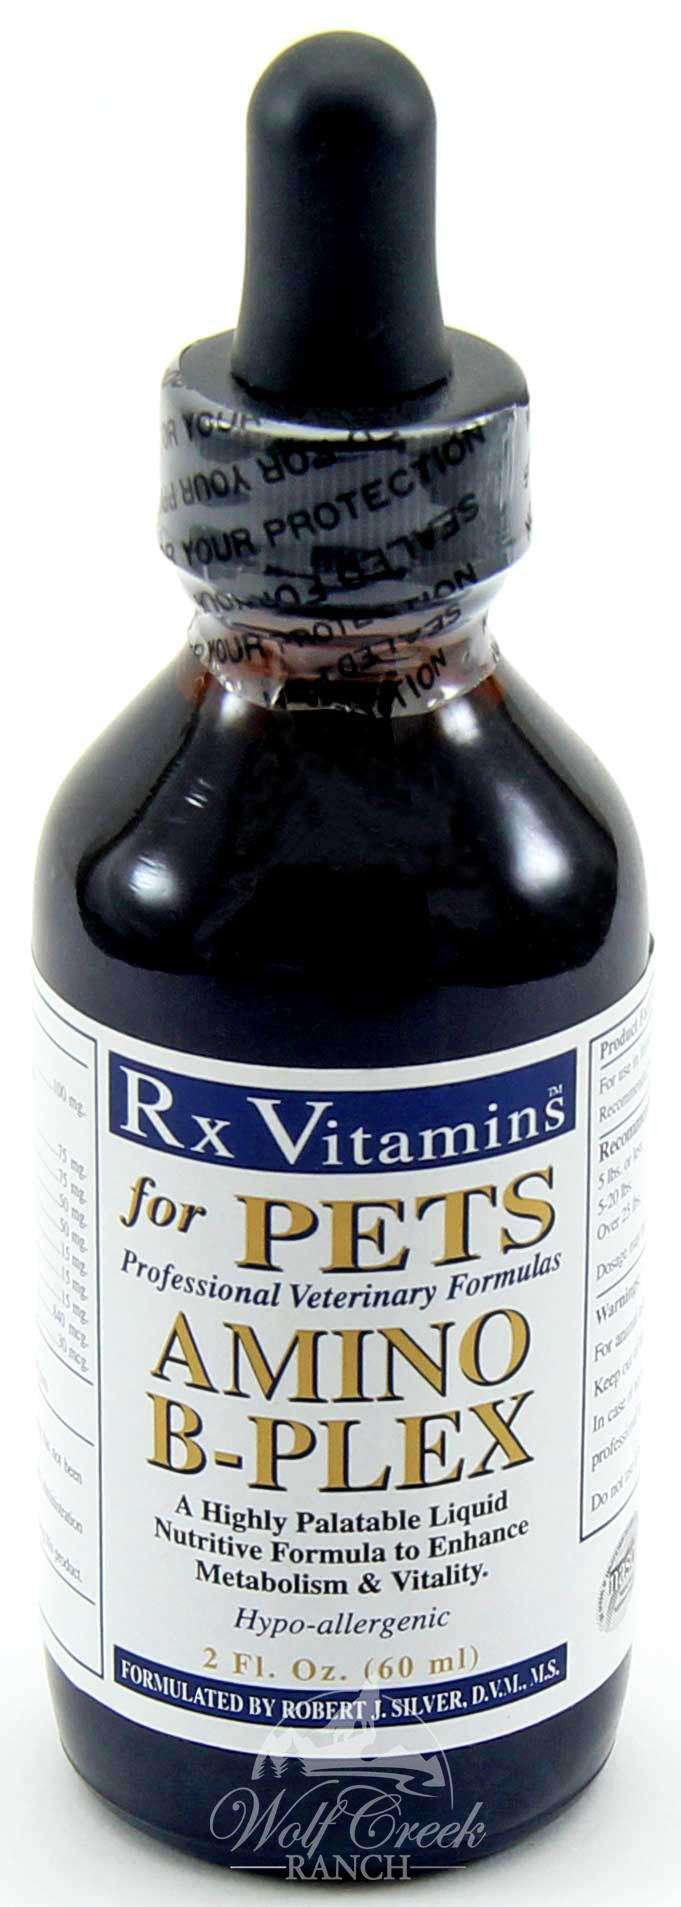 Rx Vitamins for Pets Professional Veterinary Formula RX Amino B-Plex